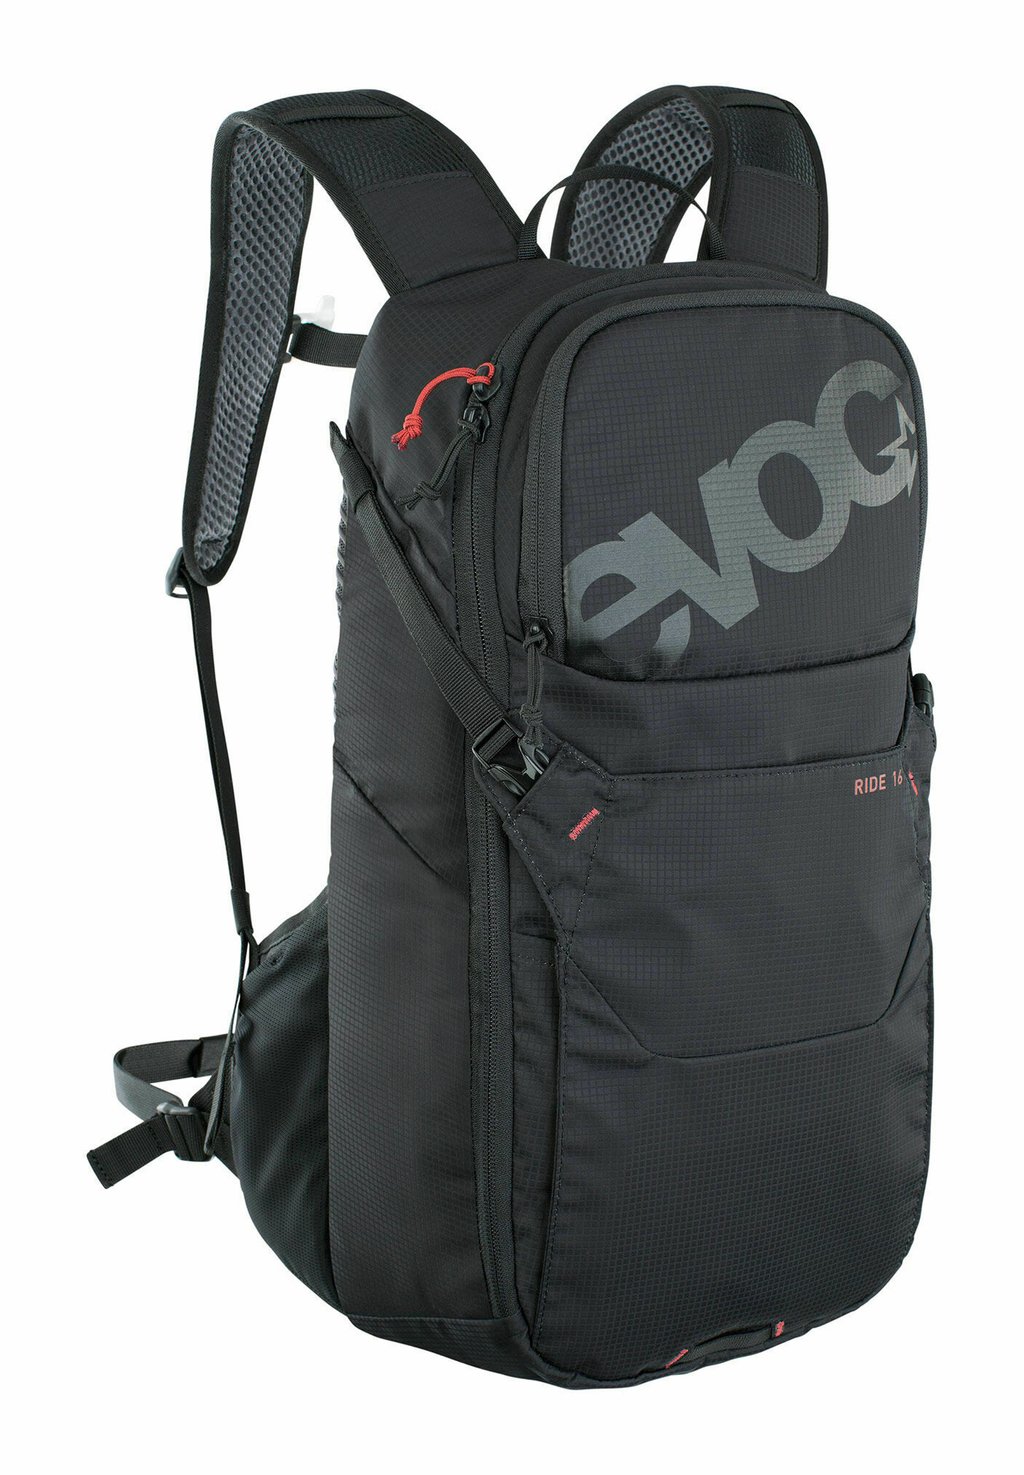 Рюкзак RIDE 16 Evoc Sports, цвет schwarz